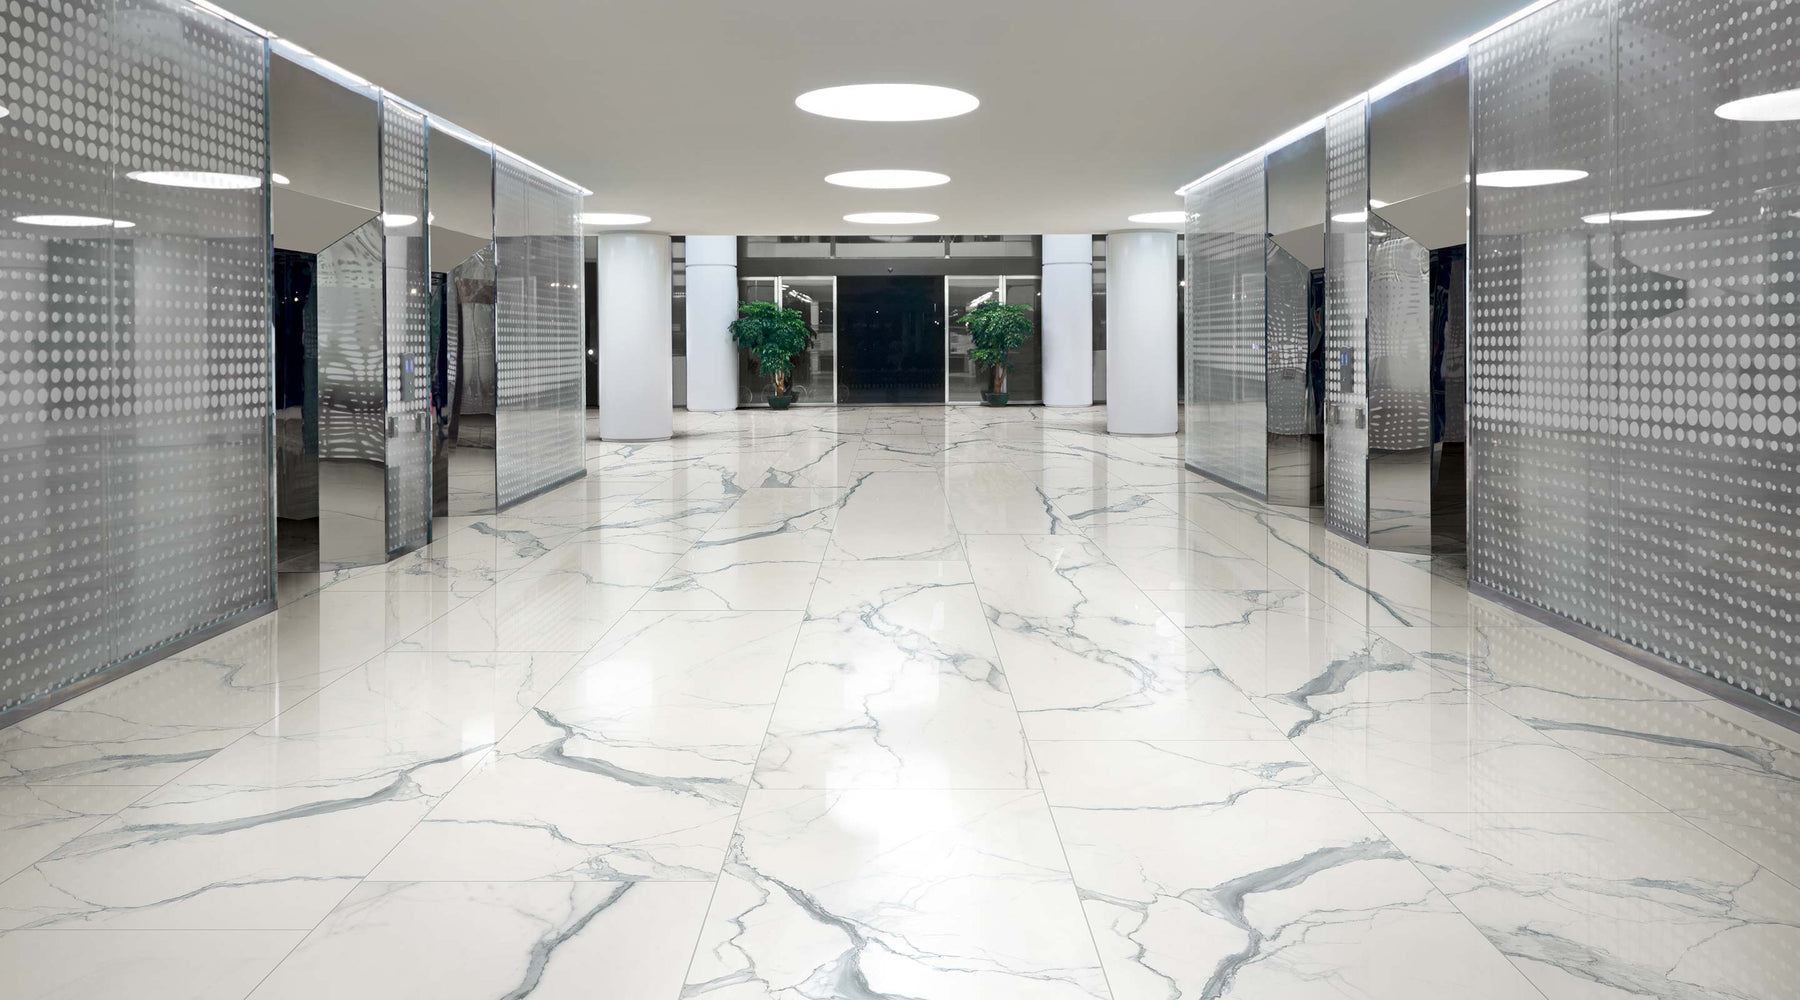 Tile commercial flooring